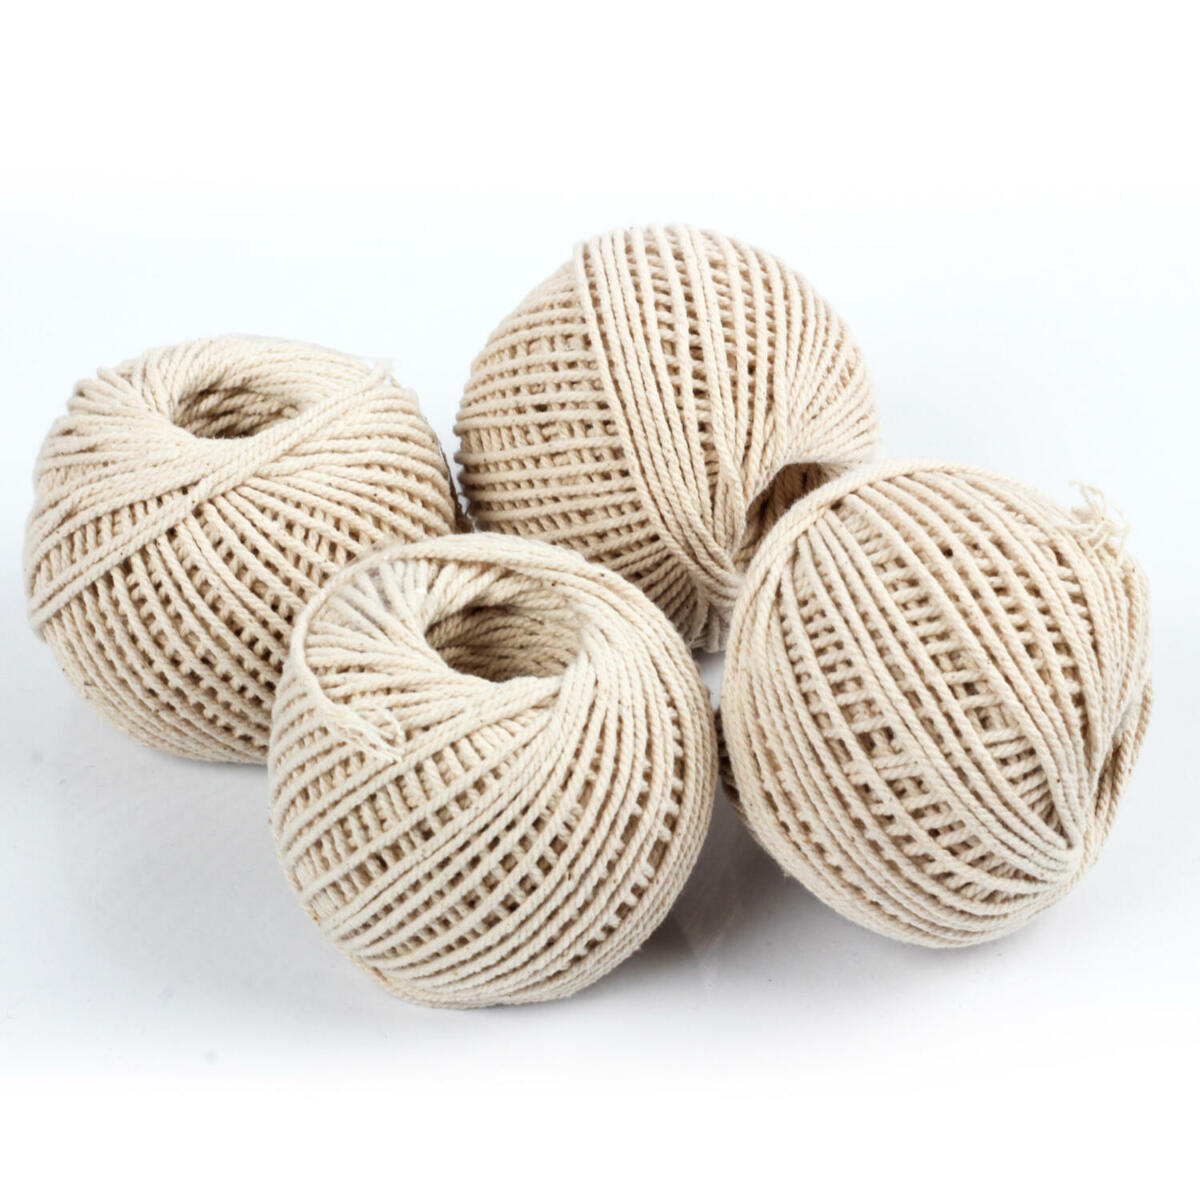 Urban Platter Natural Cotton Twine Thread Balls, Pack of 4, [40g Each]